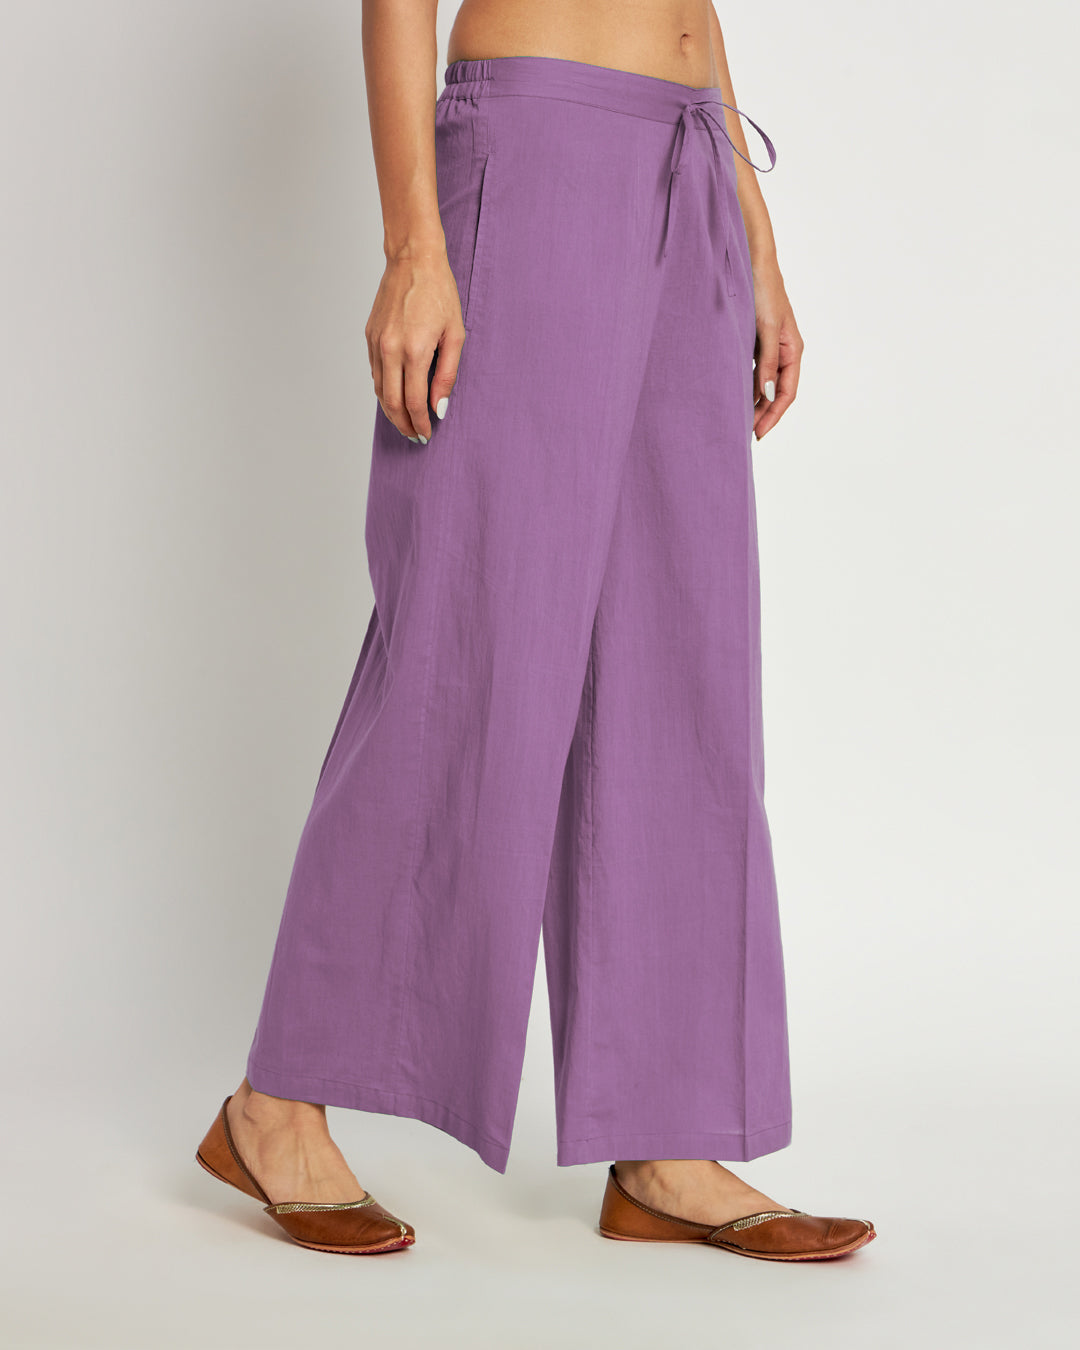 Janaiya Wide Legged Pants - Lilac Grey - Poplook.com